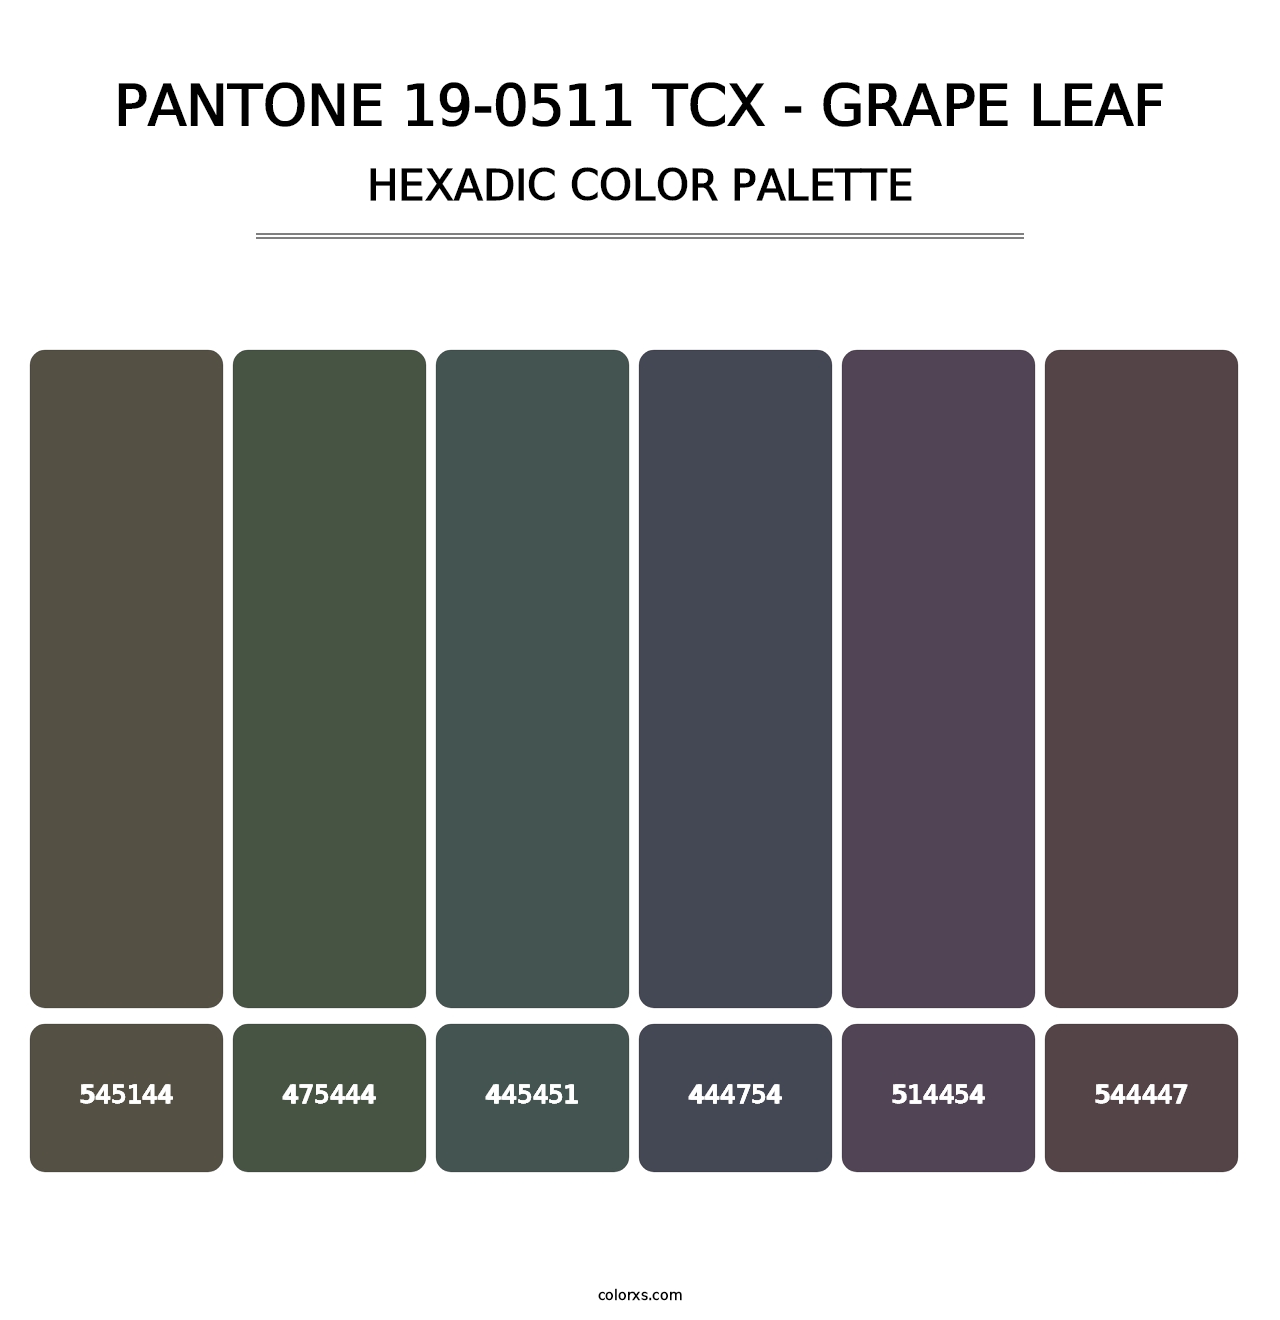 PANTONE 19-0511 TCX - Grape Leaf - Hexadic Color Palette